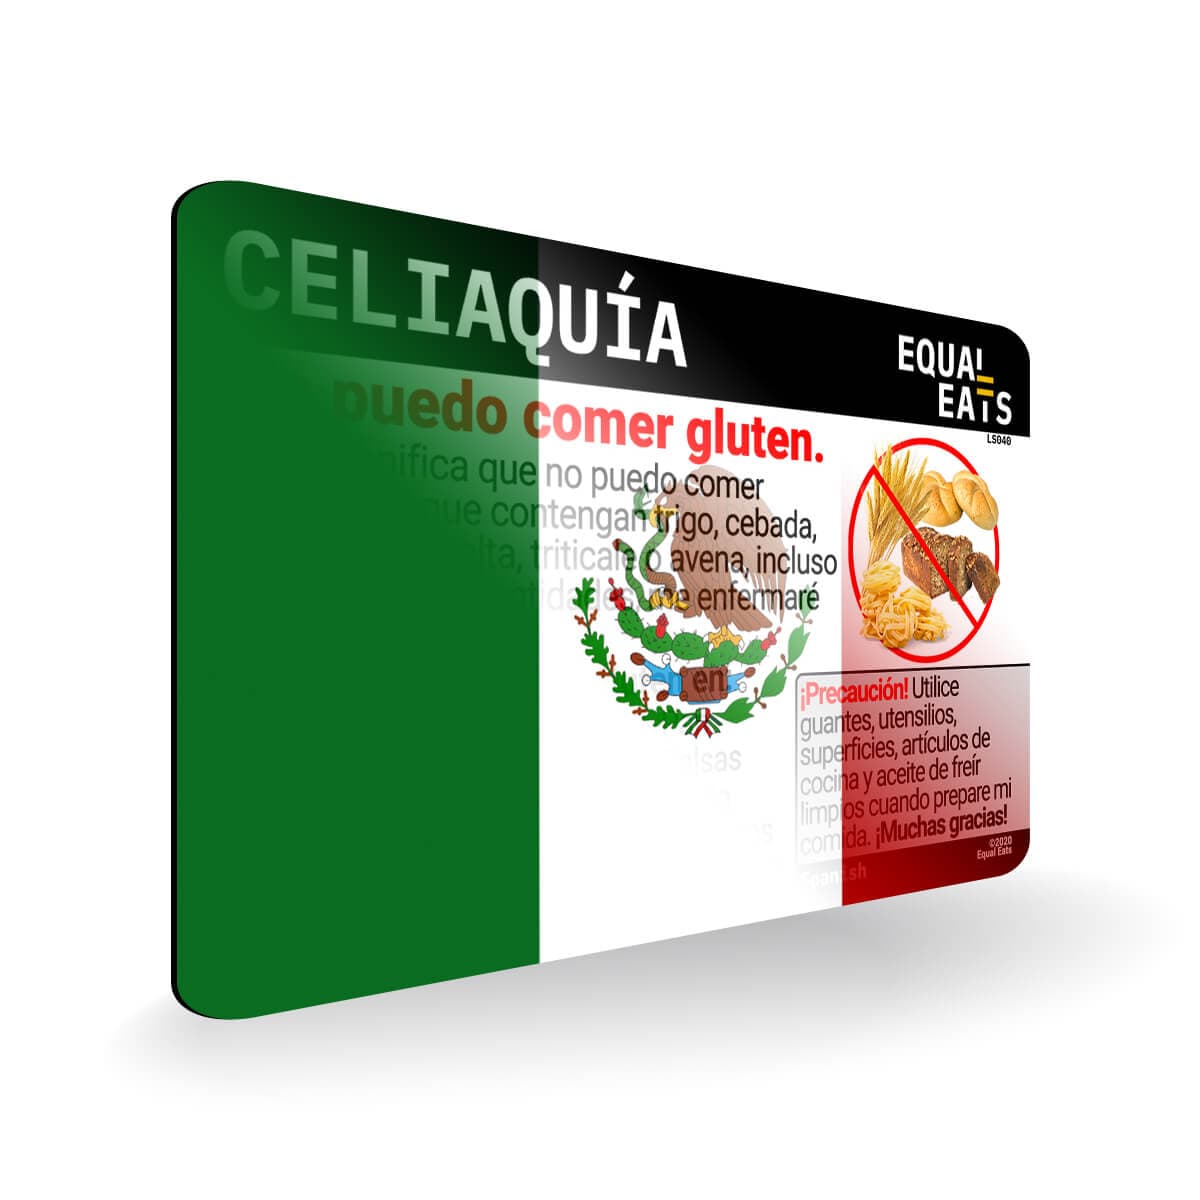 Spanish Celiac Card Gluten Free Travel In Latin America Equal Eats